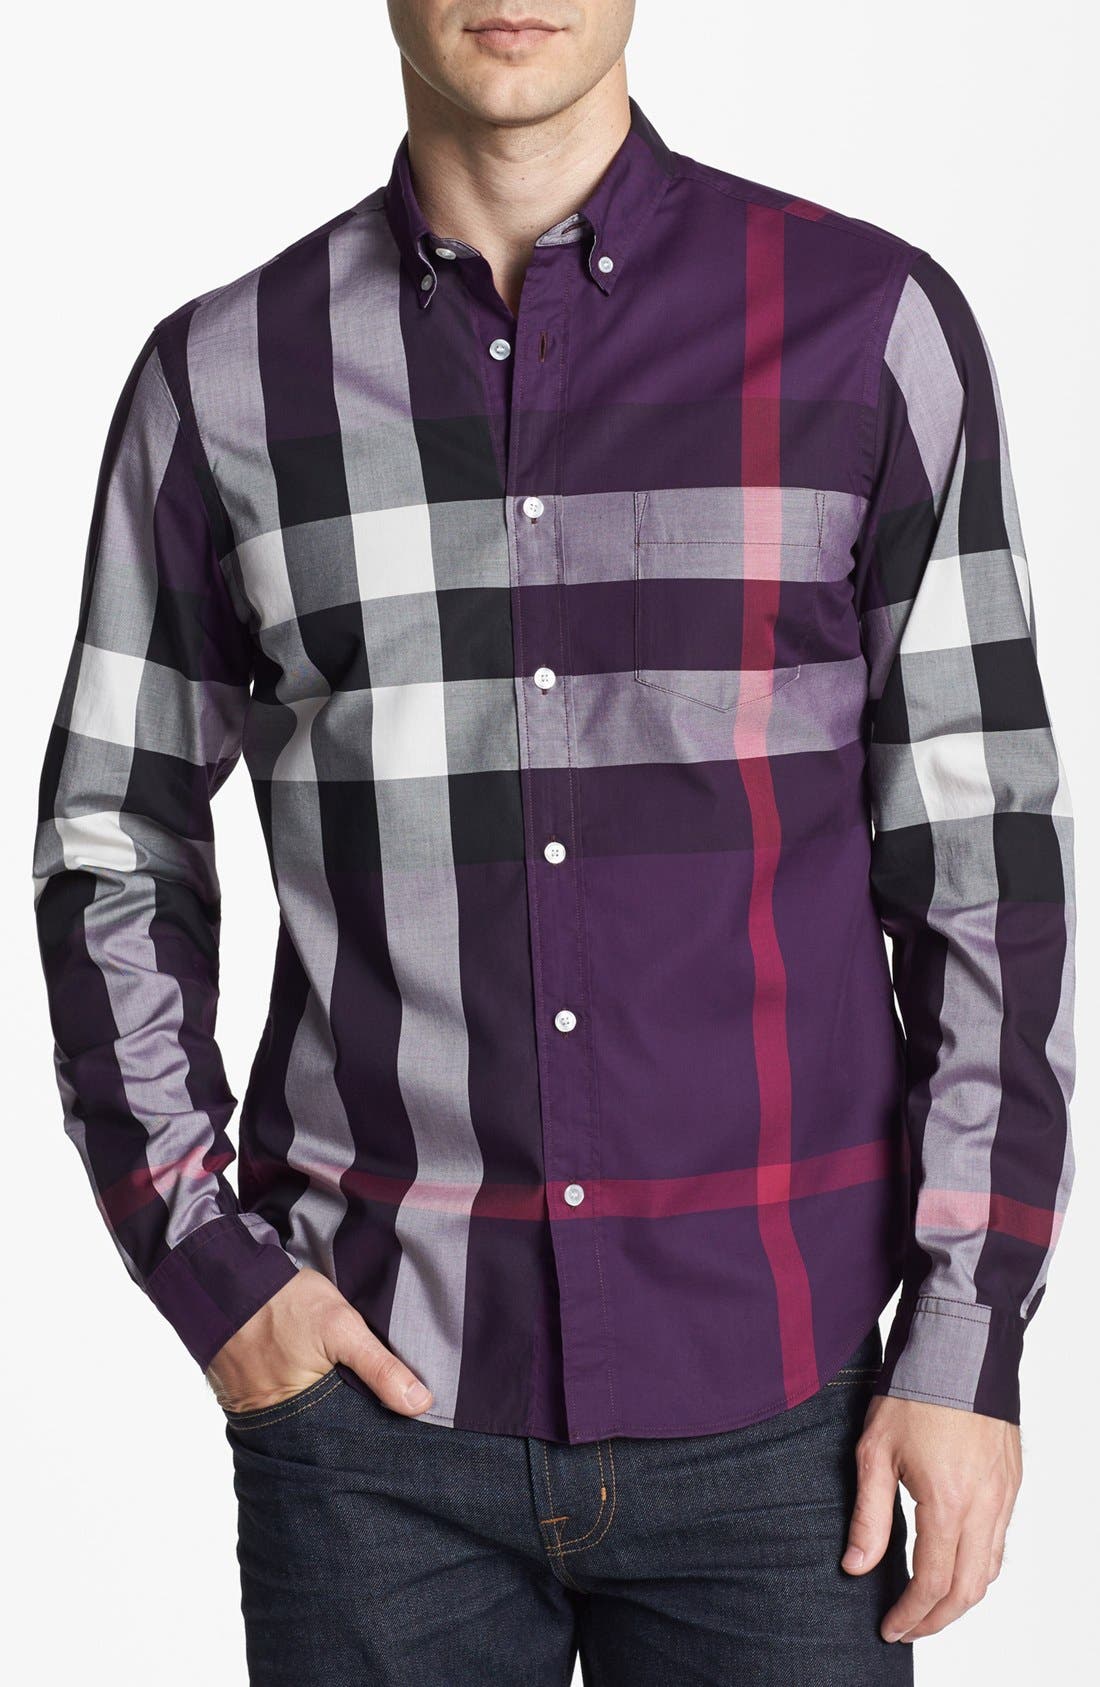 burberry shirt purple